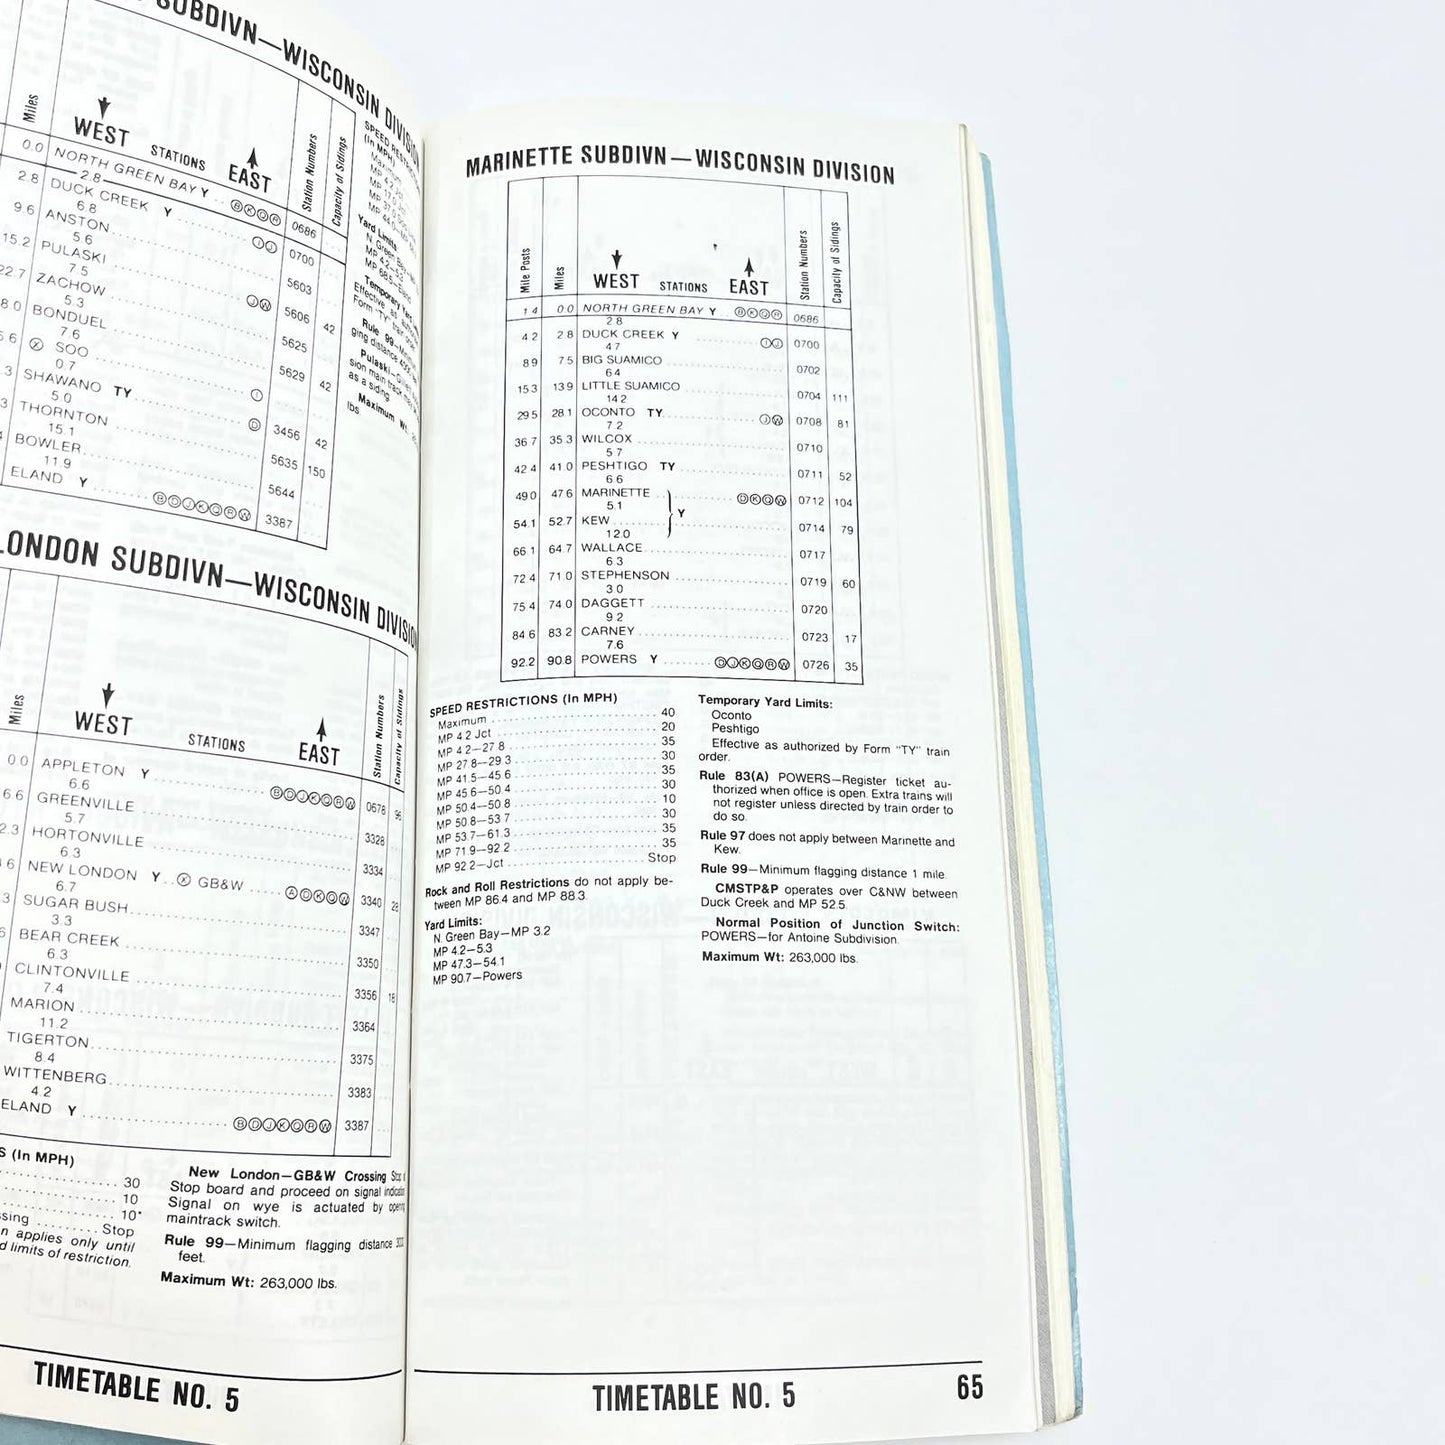 1981 Chicago Northwestern Railway Employee Timetable No. 5 Booklet TG2